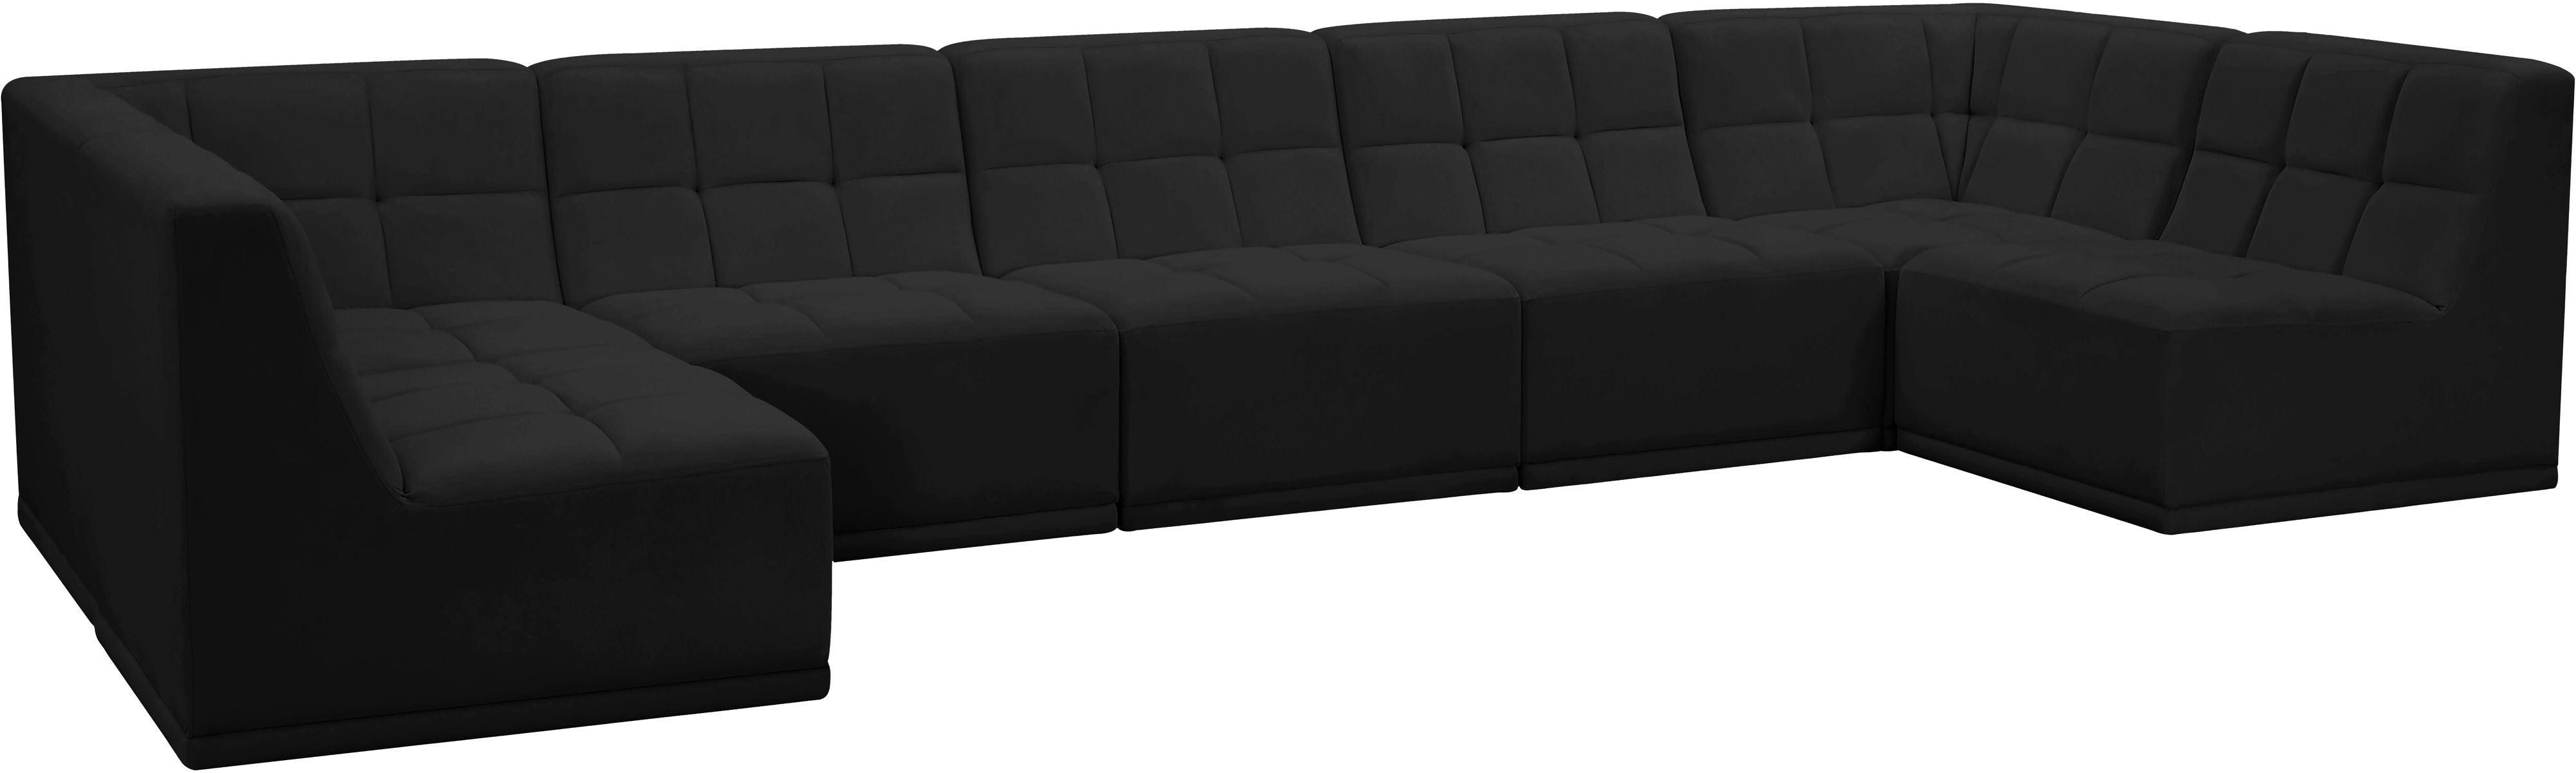 Meridian Furniture - Relax - Modular Sectional 7 Piece - Black - 5th Avenue Furniture